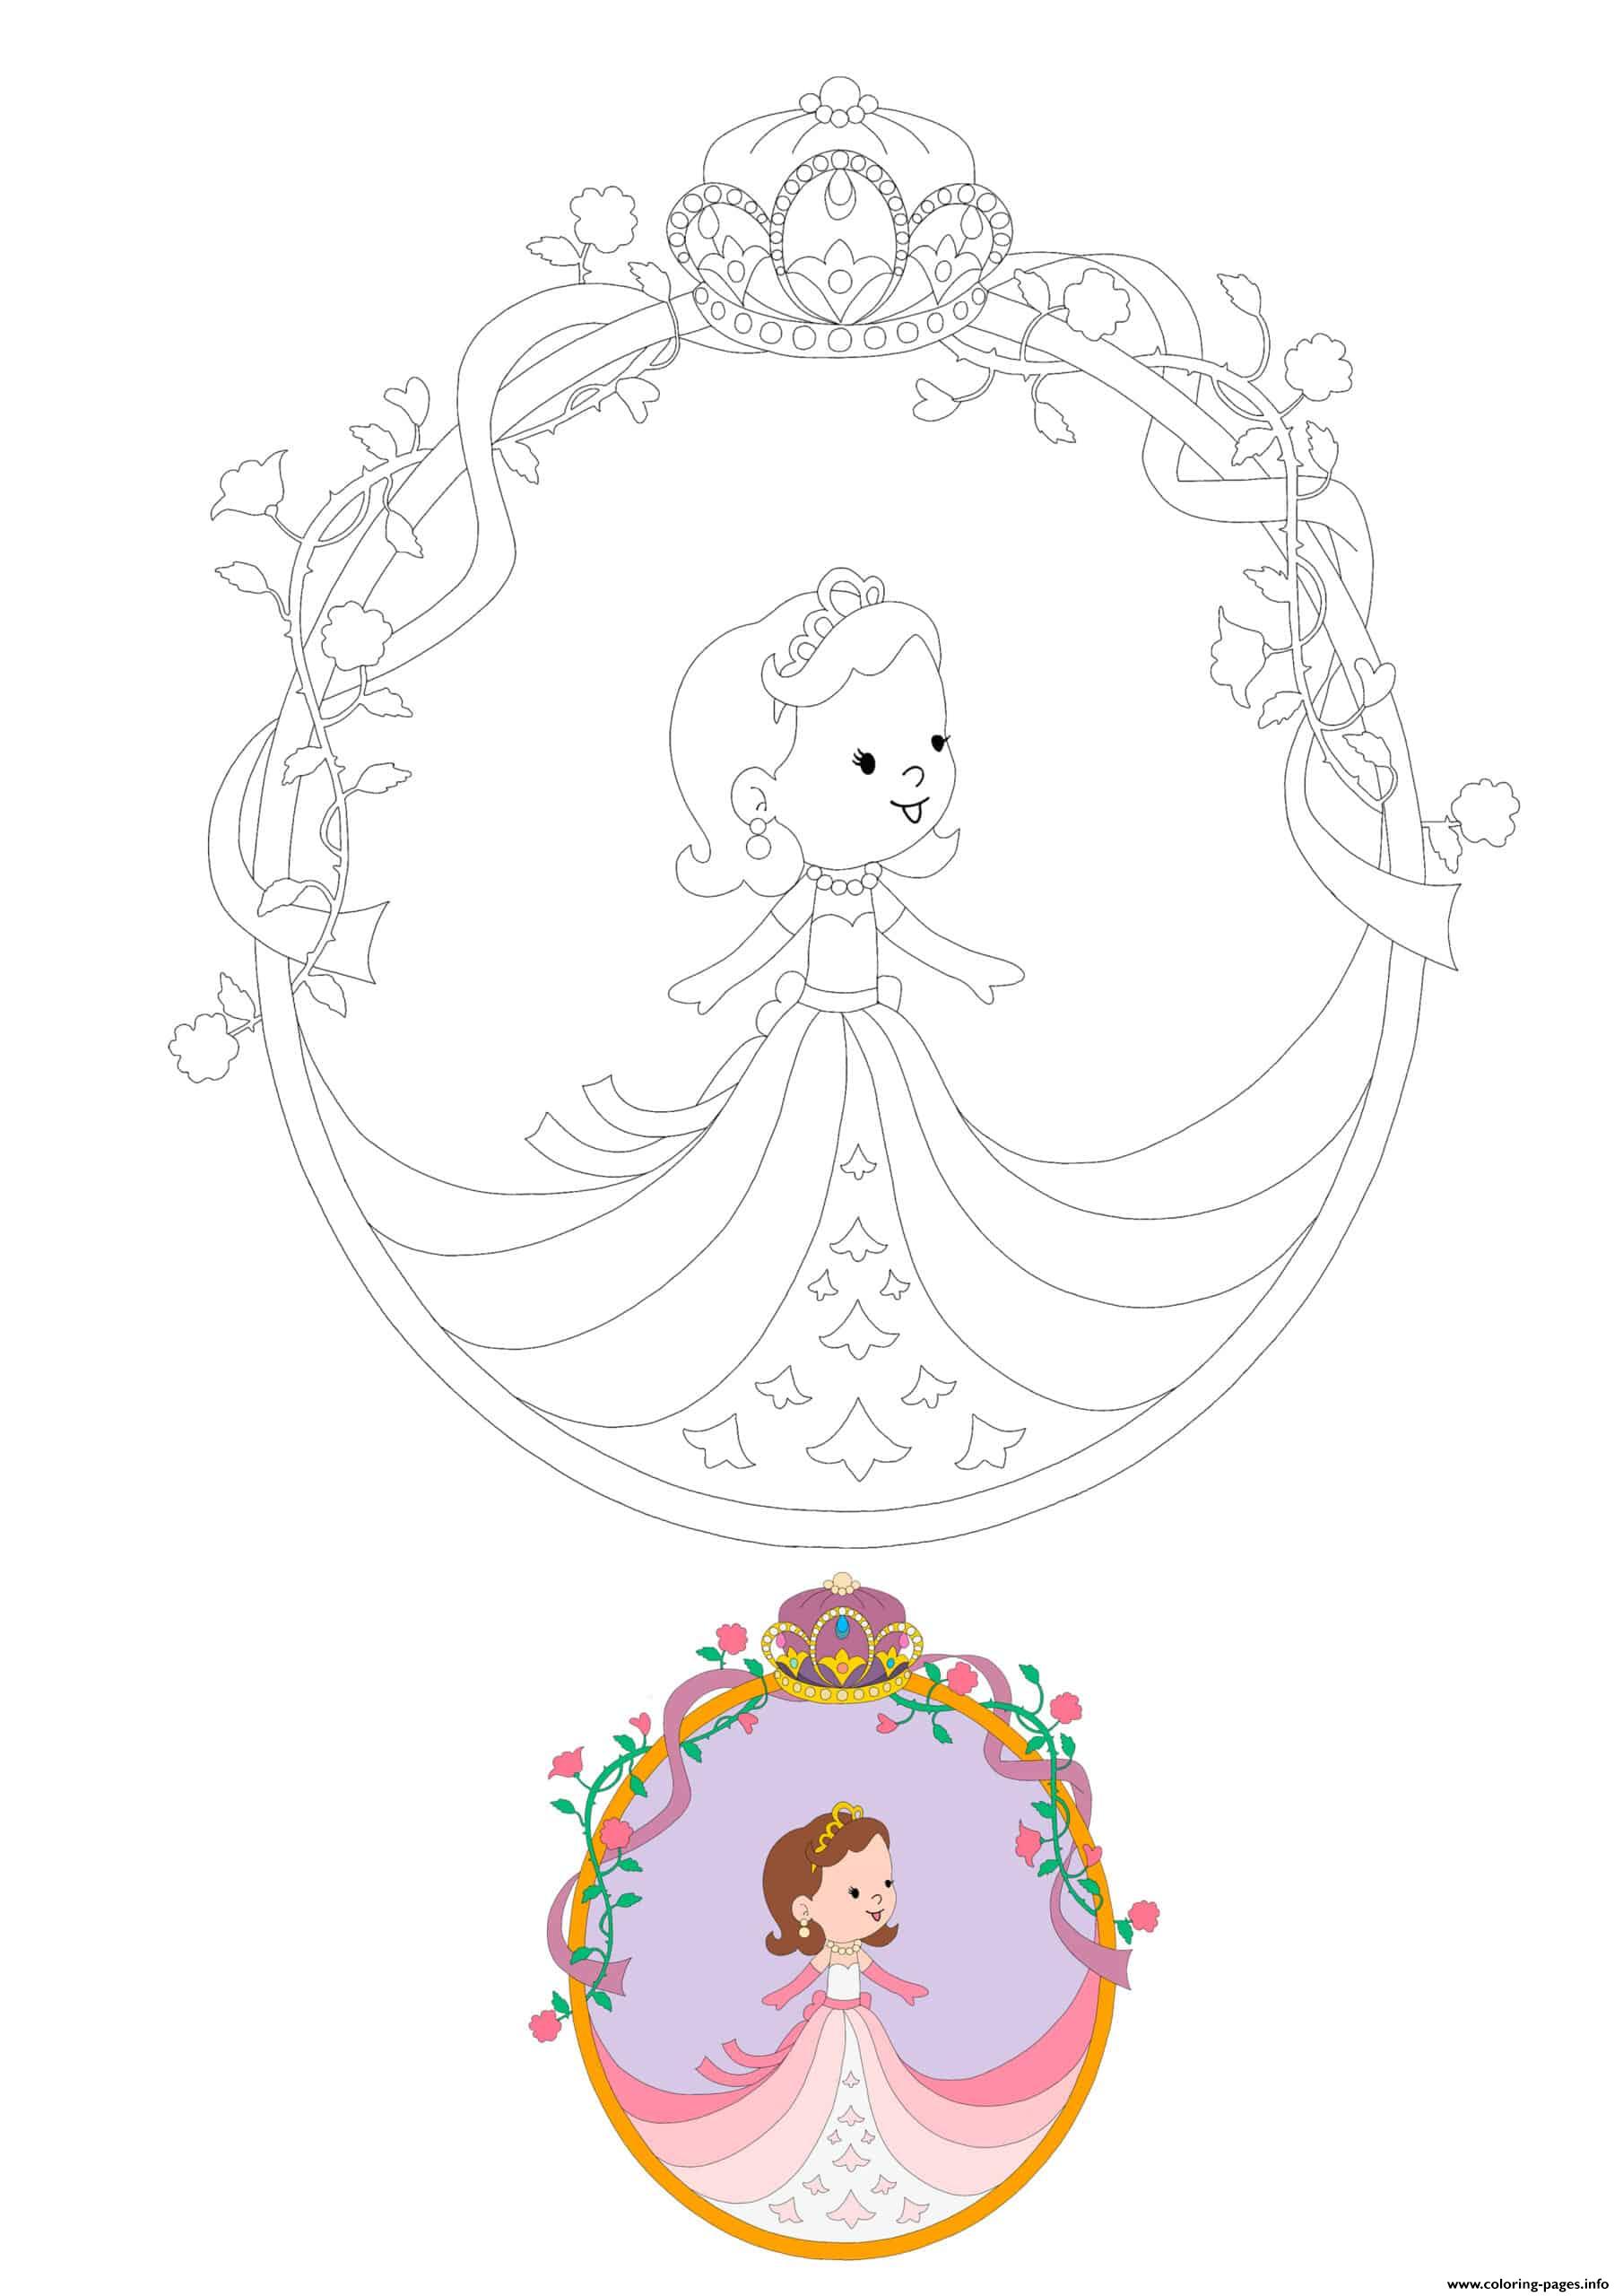 Baby Princess Crown coloring